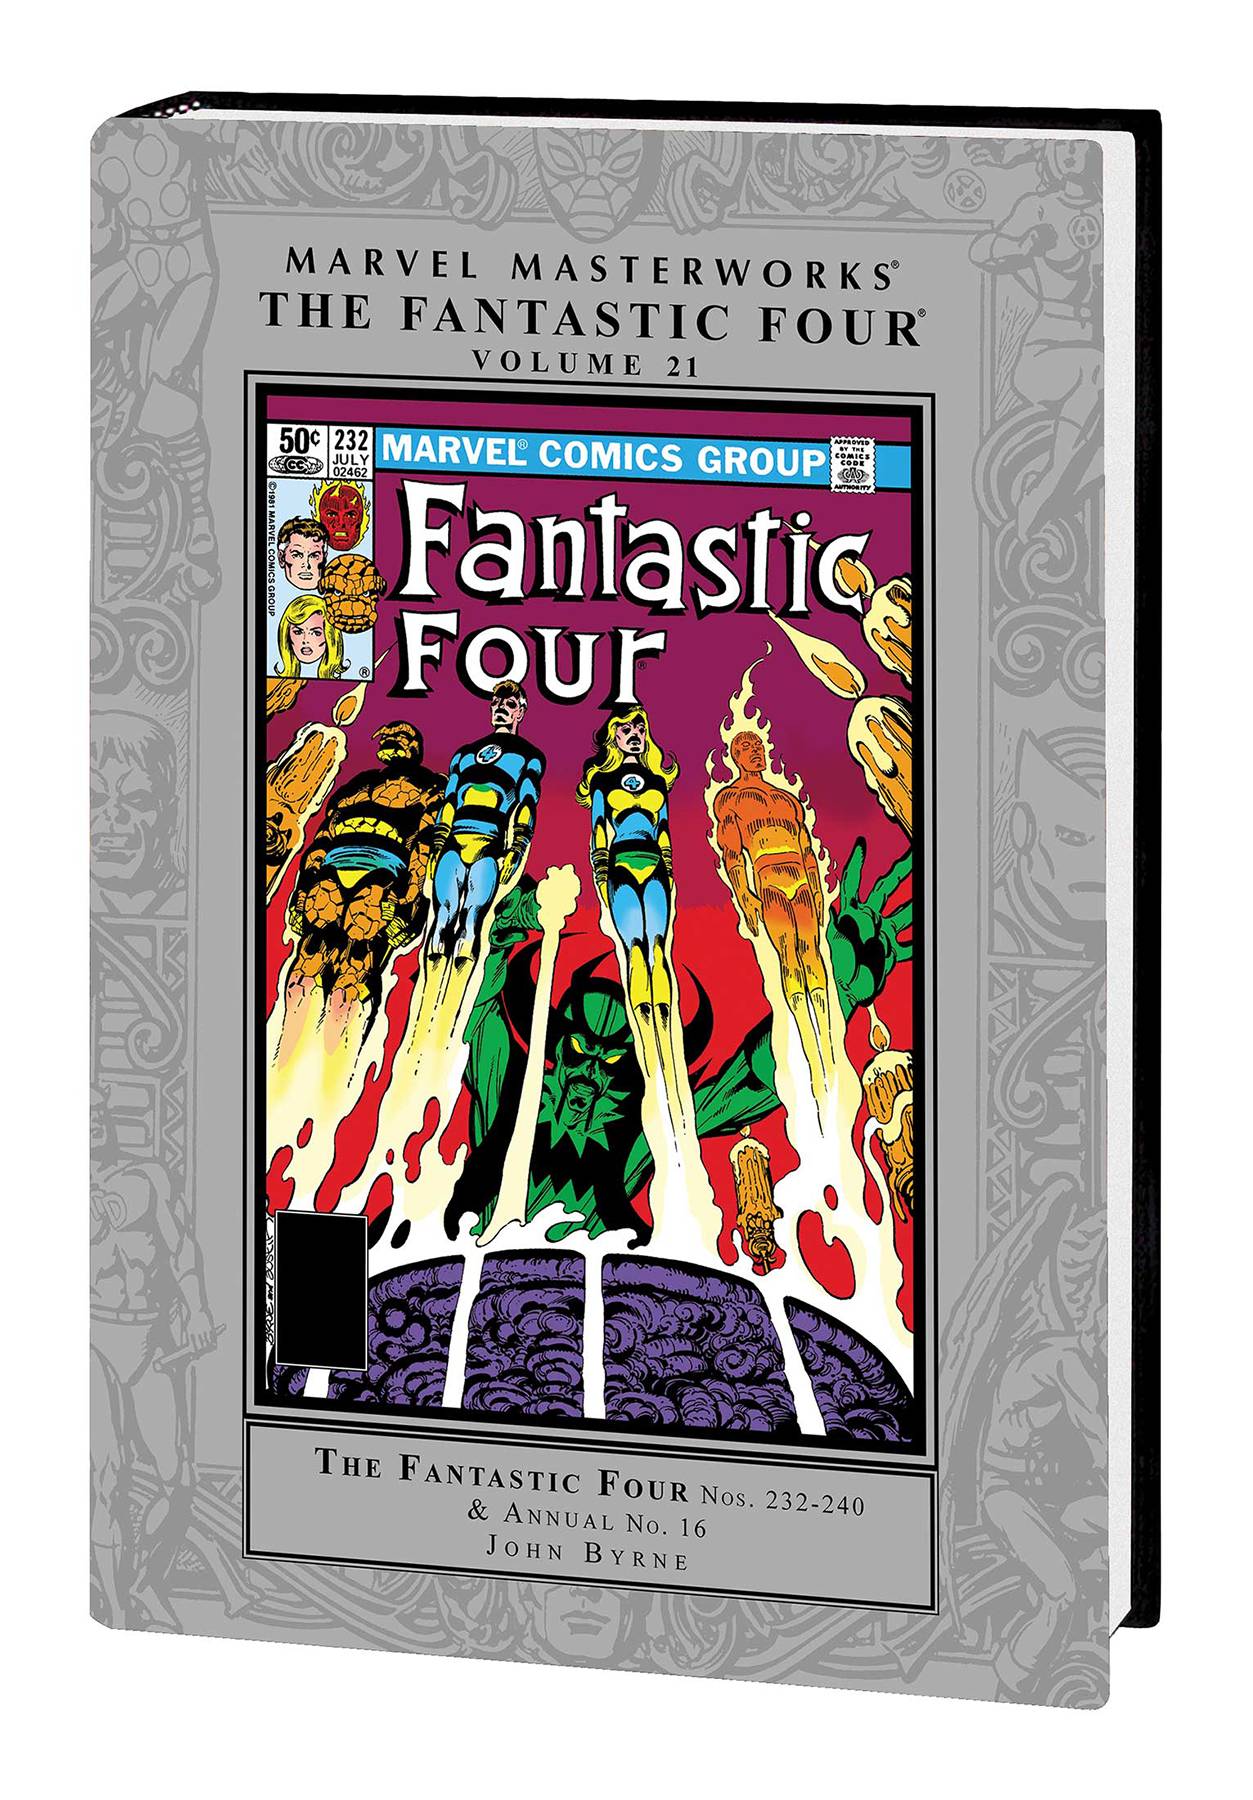 Marvel Masterworks Fantastic Four Hardcover Volume 21